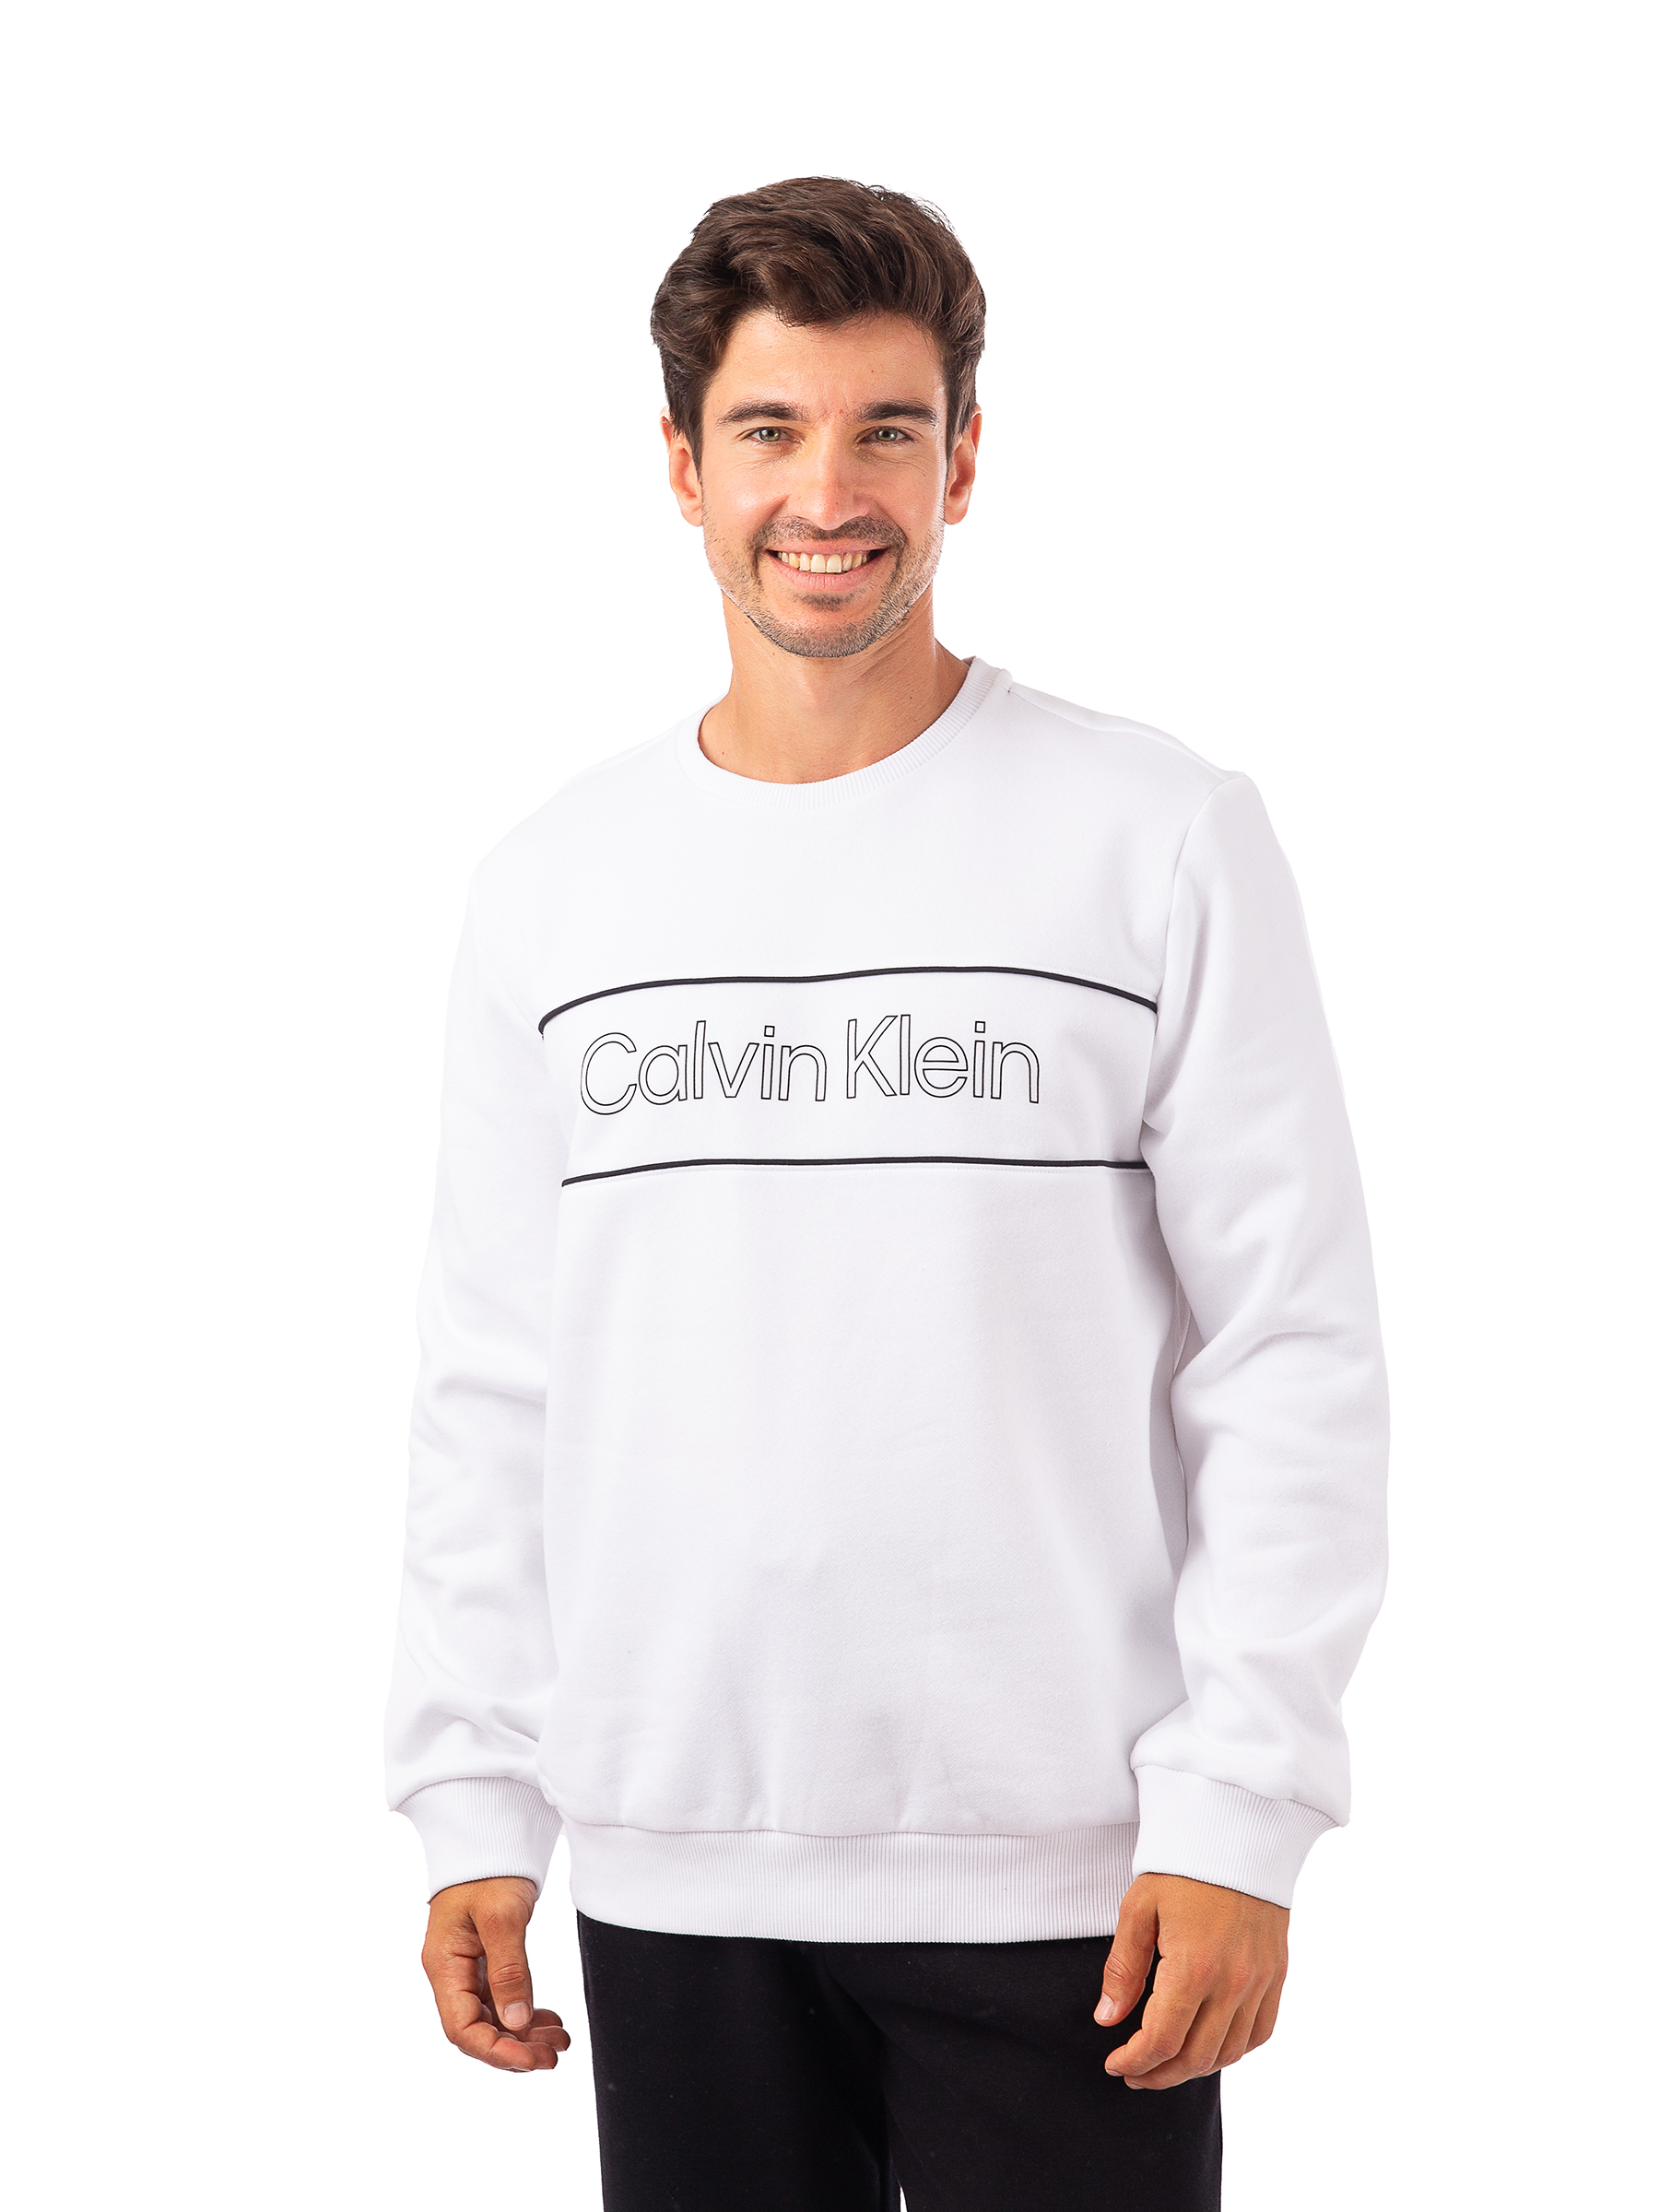 Свитшот мужской Calvin Klein 40J6242 белый M